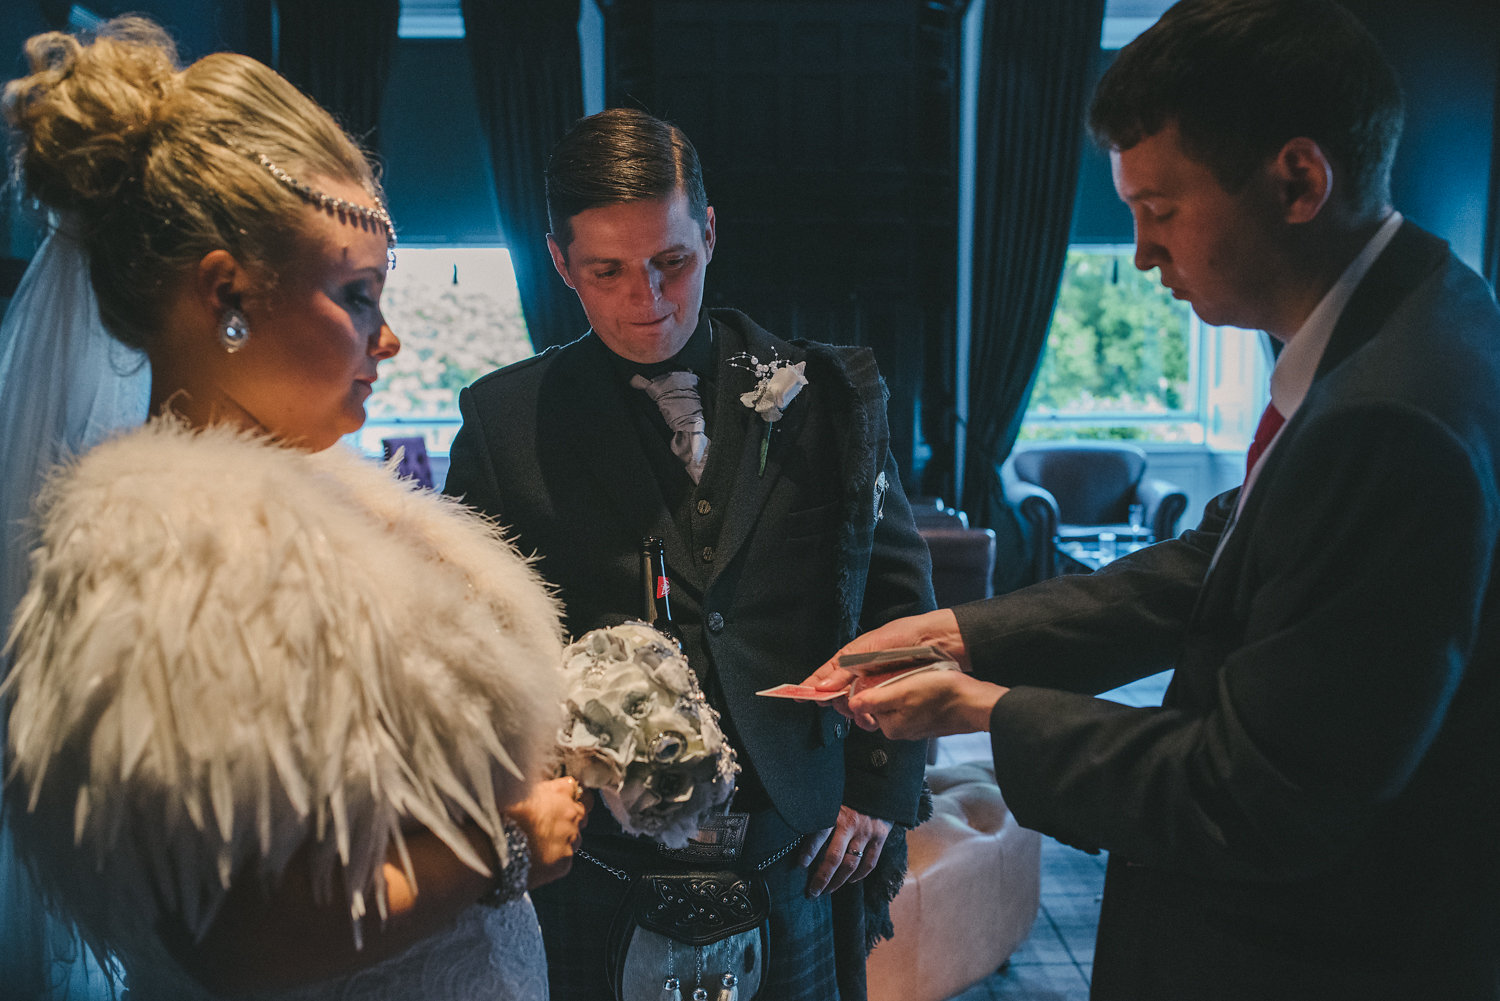 A Magician Doing Magic Tricks in a Wedding